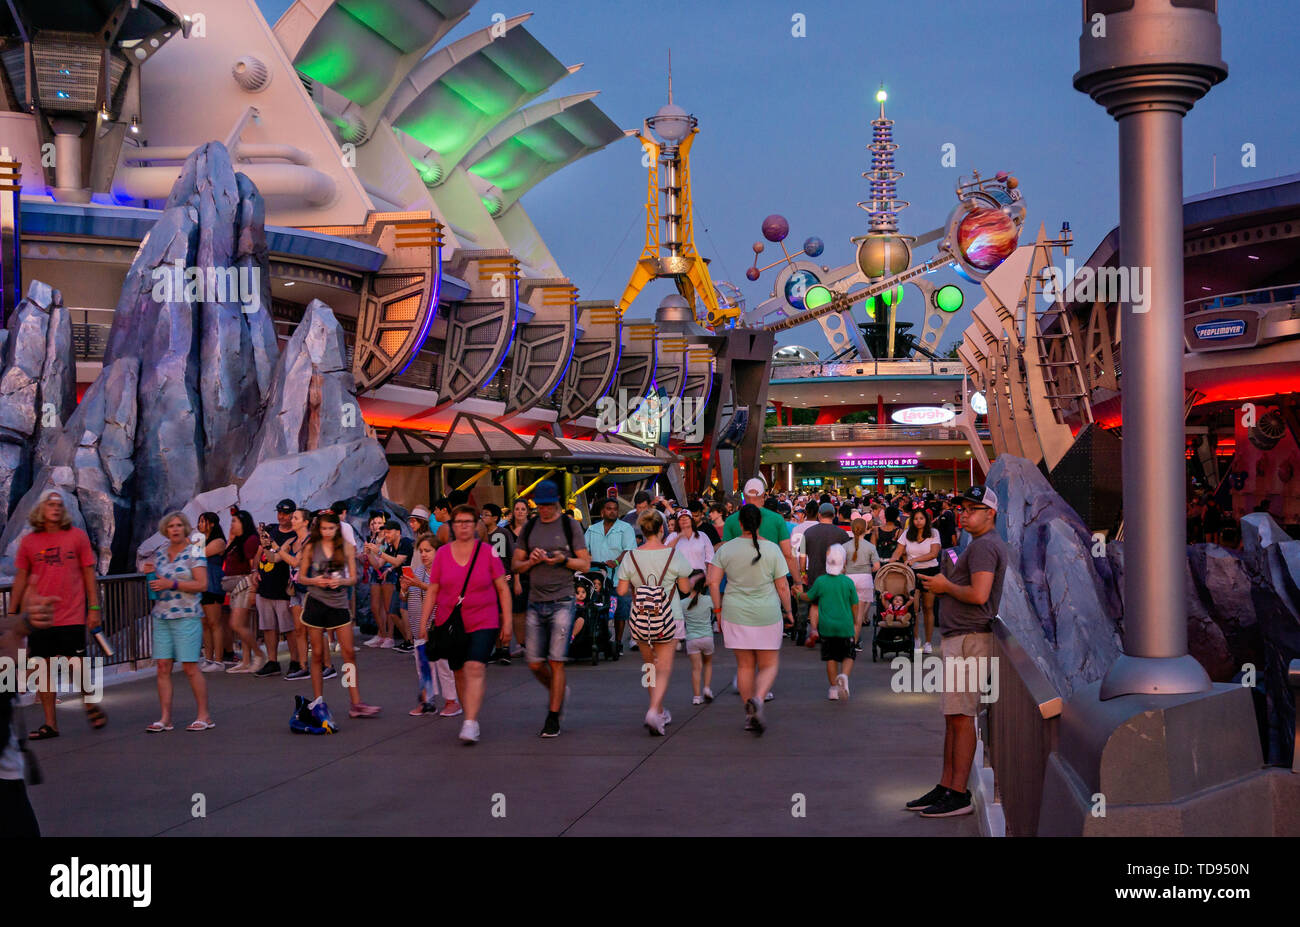 Entrée de Tomorrowland au Magic Kingdom de Disney à Orlando, florids, USA le 29 mai 2019 Banque D'Images